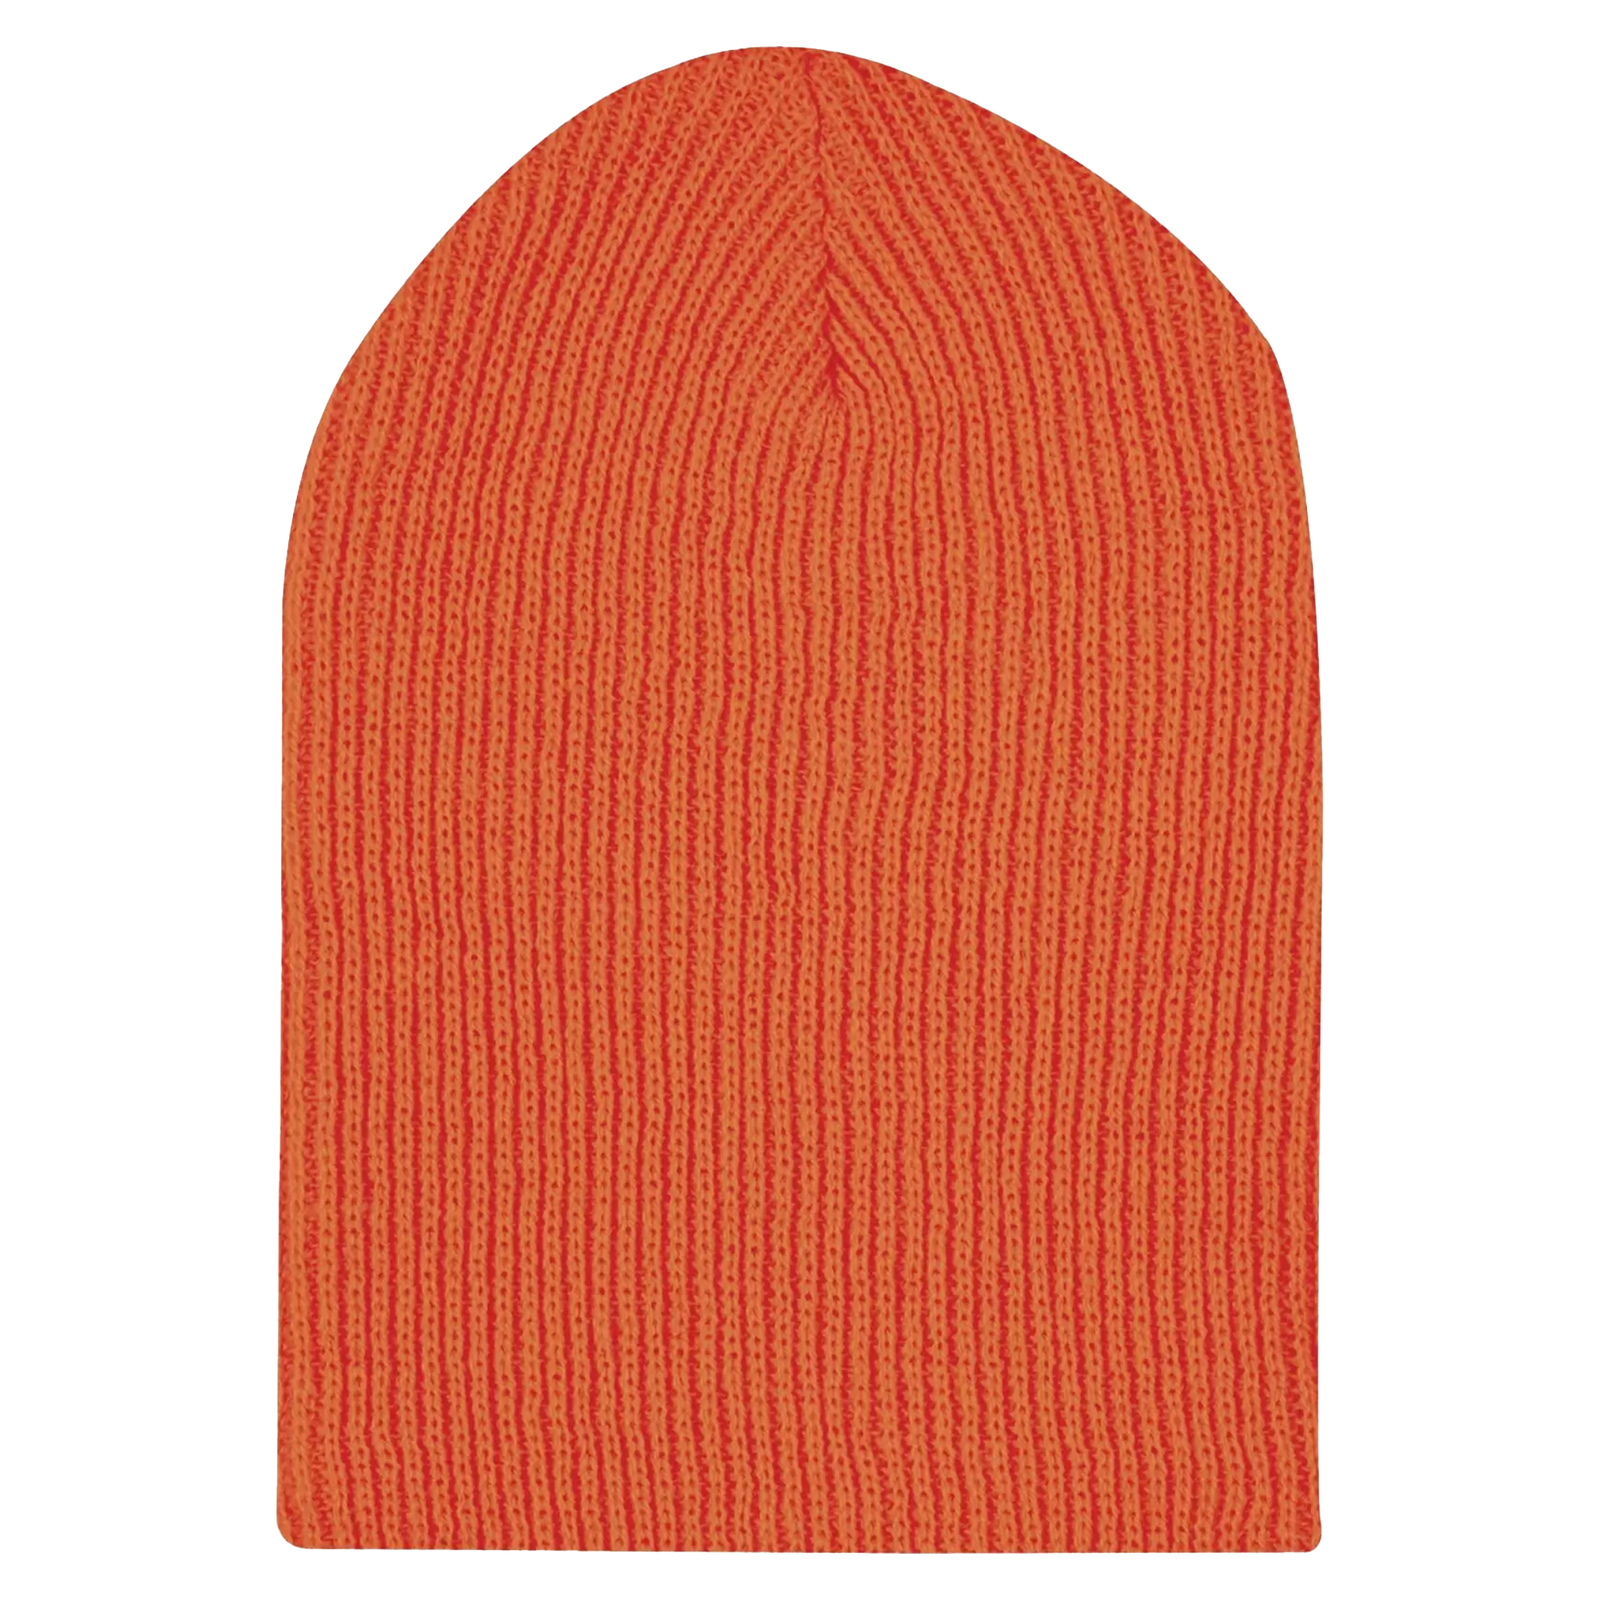 ATC Everyday Rib Knit Slouch Beanie - Adult Unisex One Size Fits All - Orange